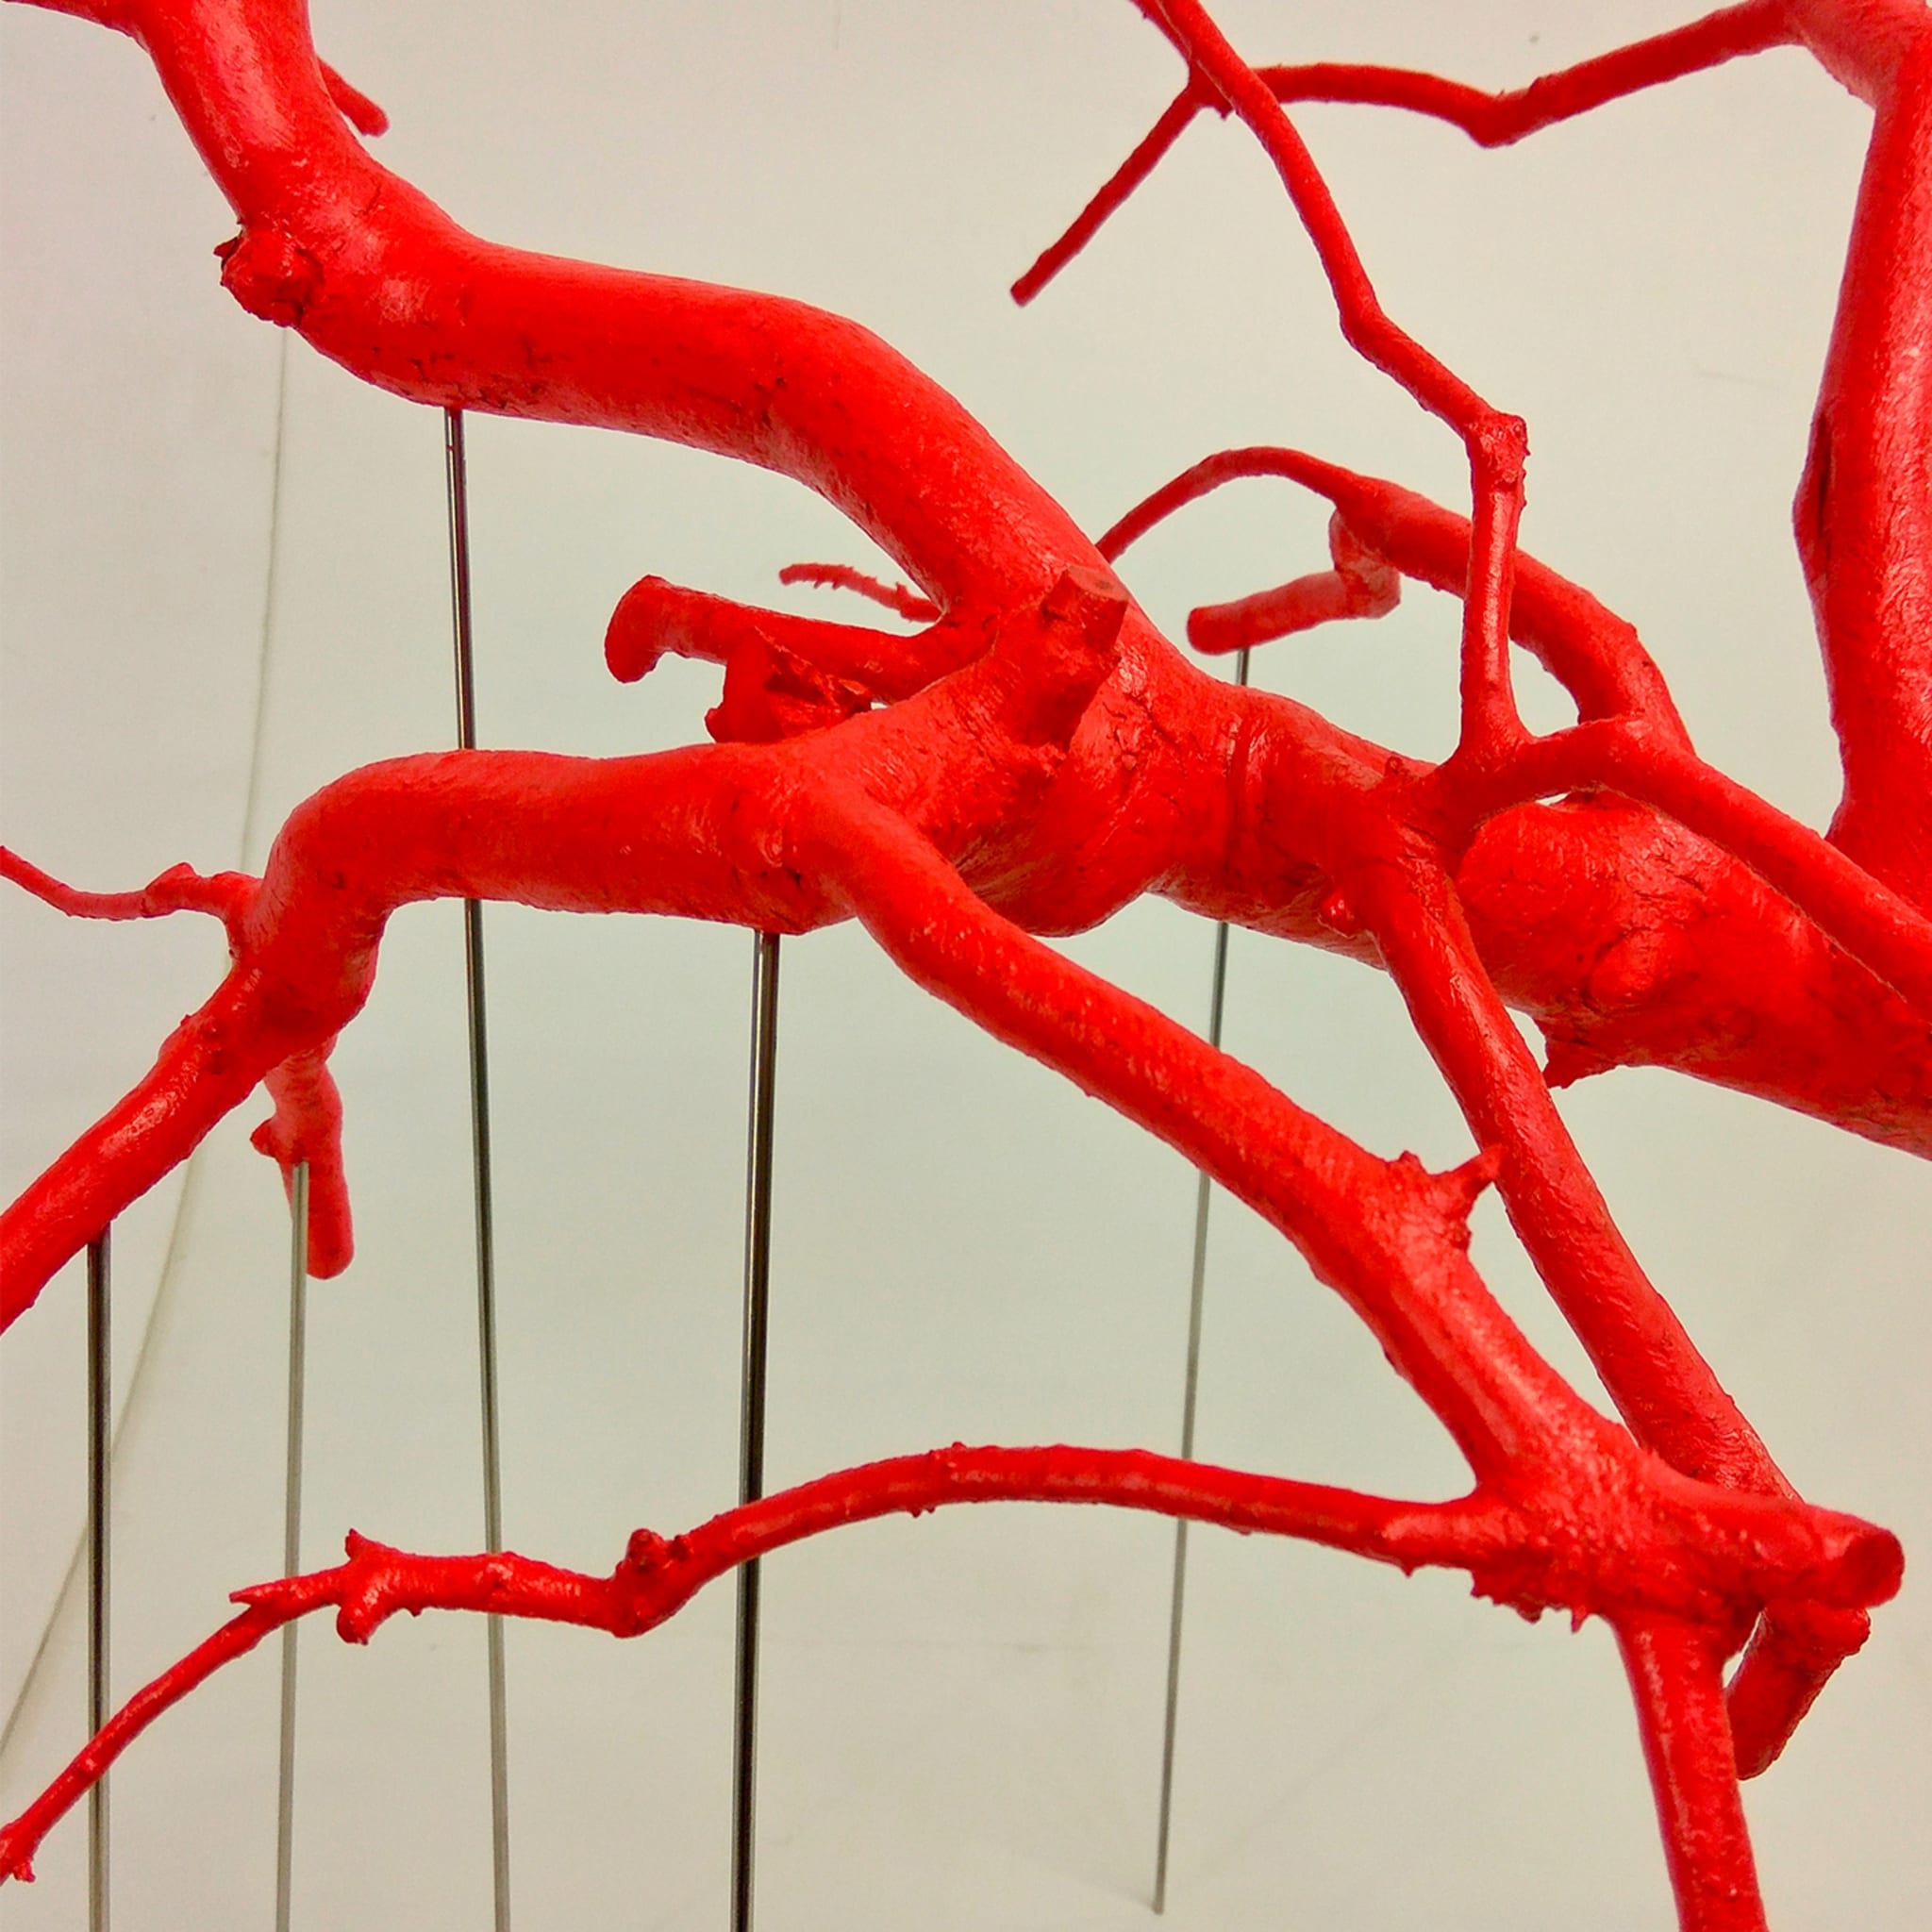 Rami Sospesi Red Sculpture - Alternative view 4